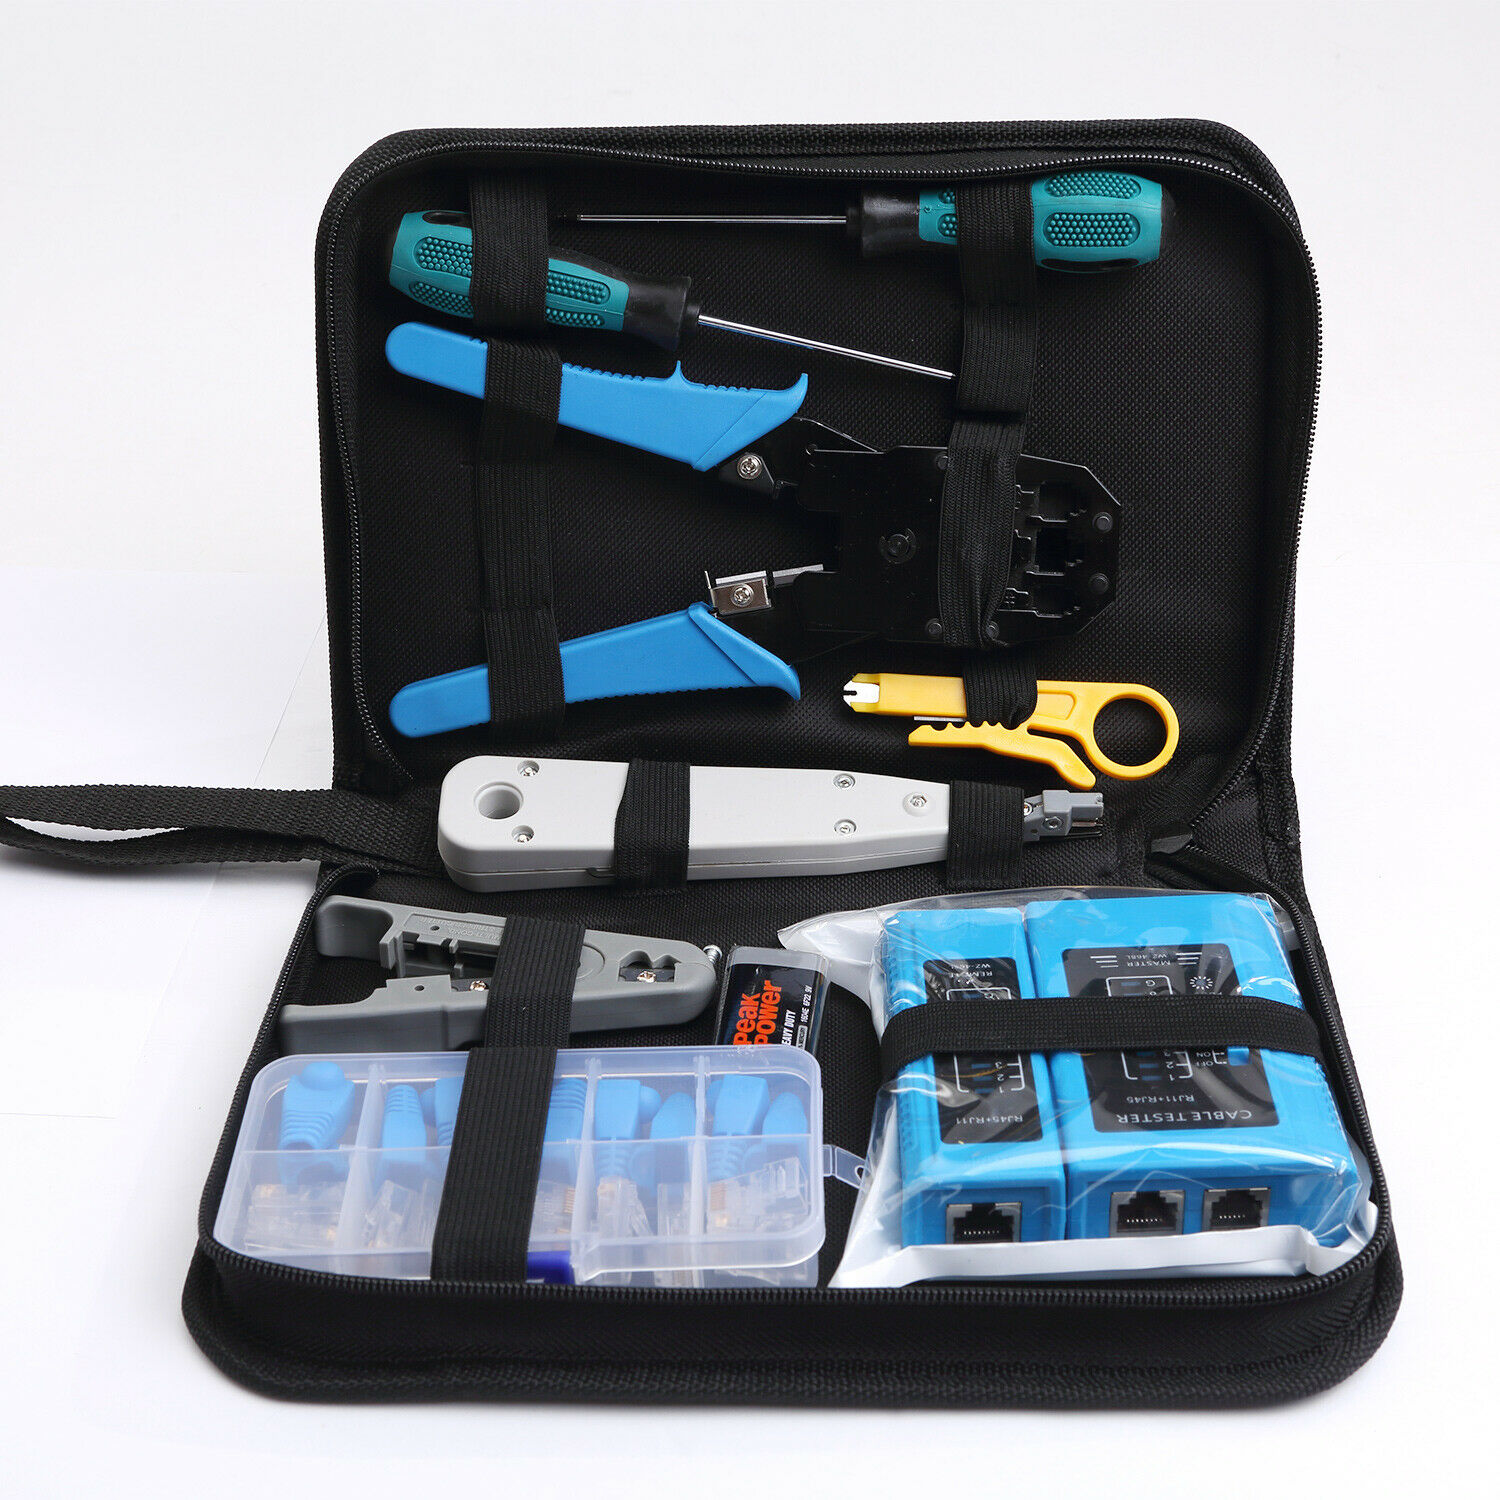 Rj45 Crimping Tool Kit Set For CAT5 CAT6 Lan Cable Tester Networ